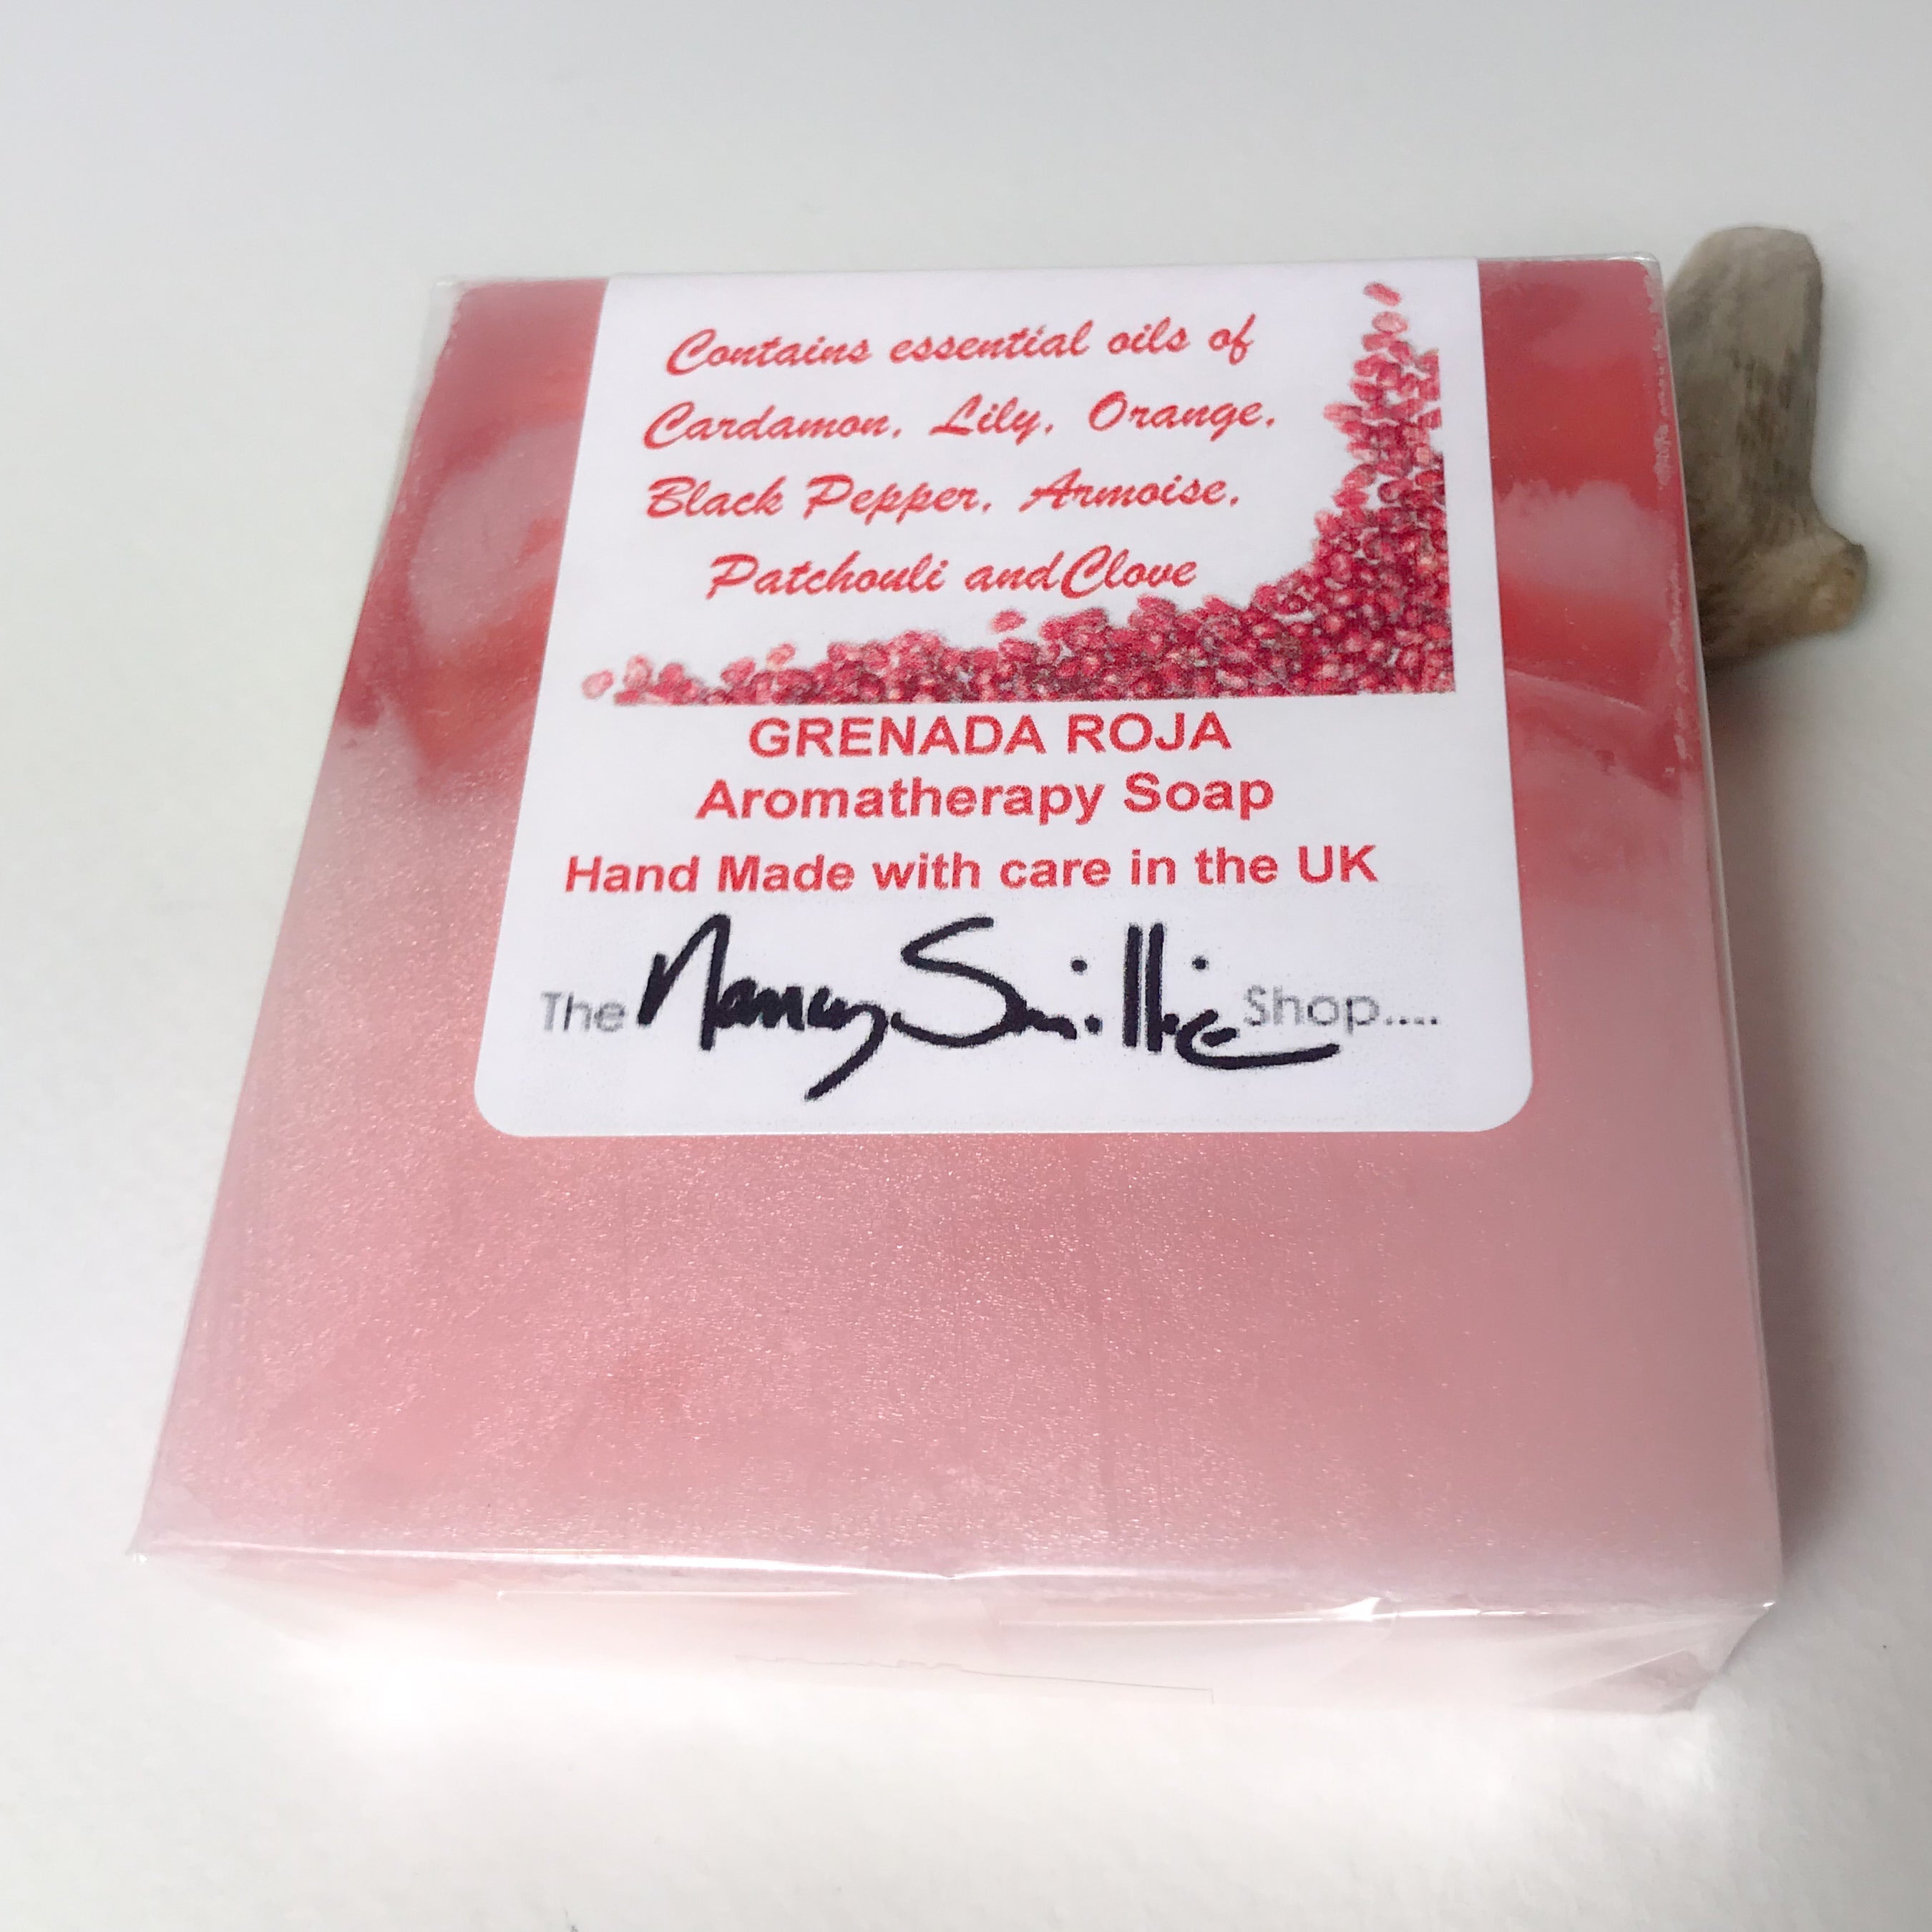 Grenada Roja Soap Slice - The Nancy Smillie Shop - Art, Jewellery & Designer Gifts Glasgow